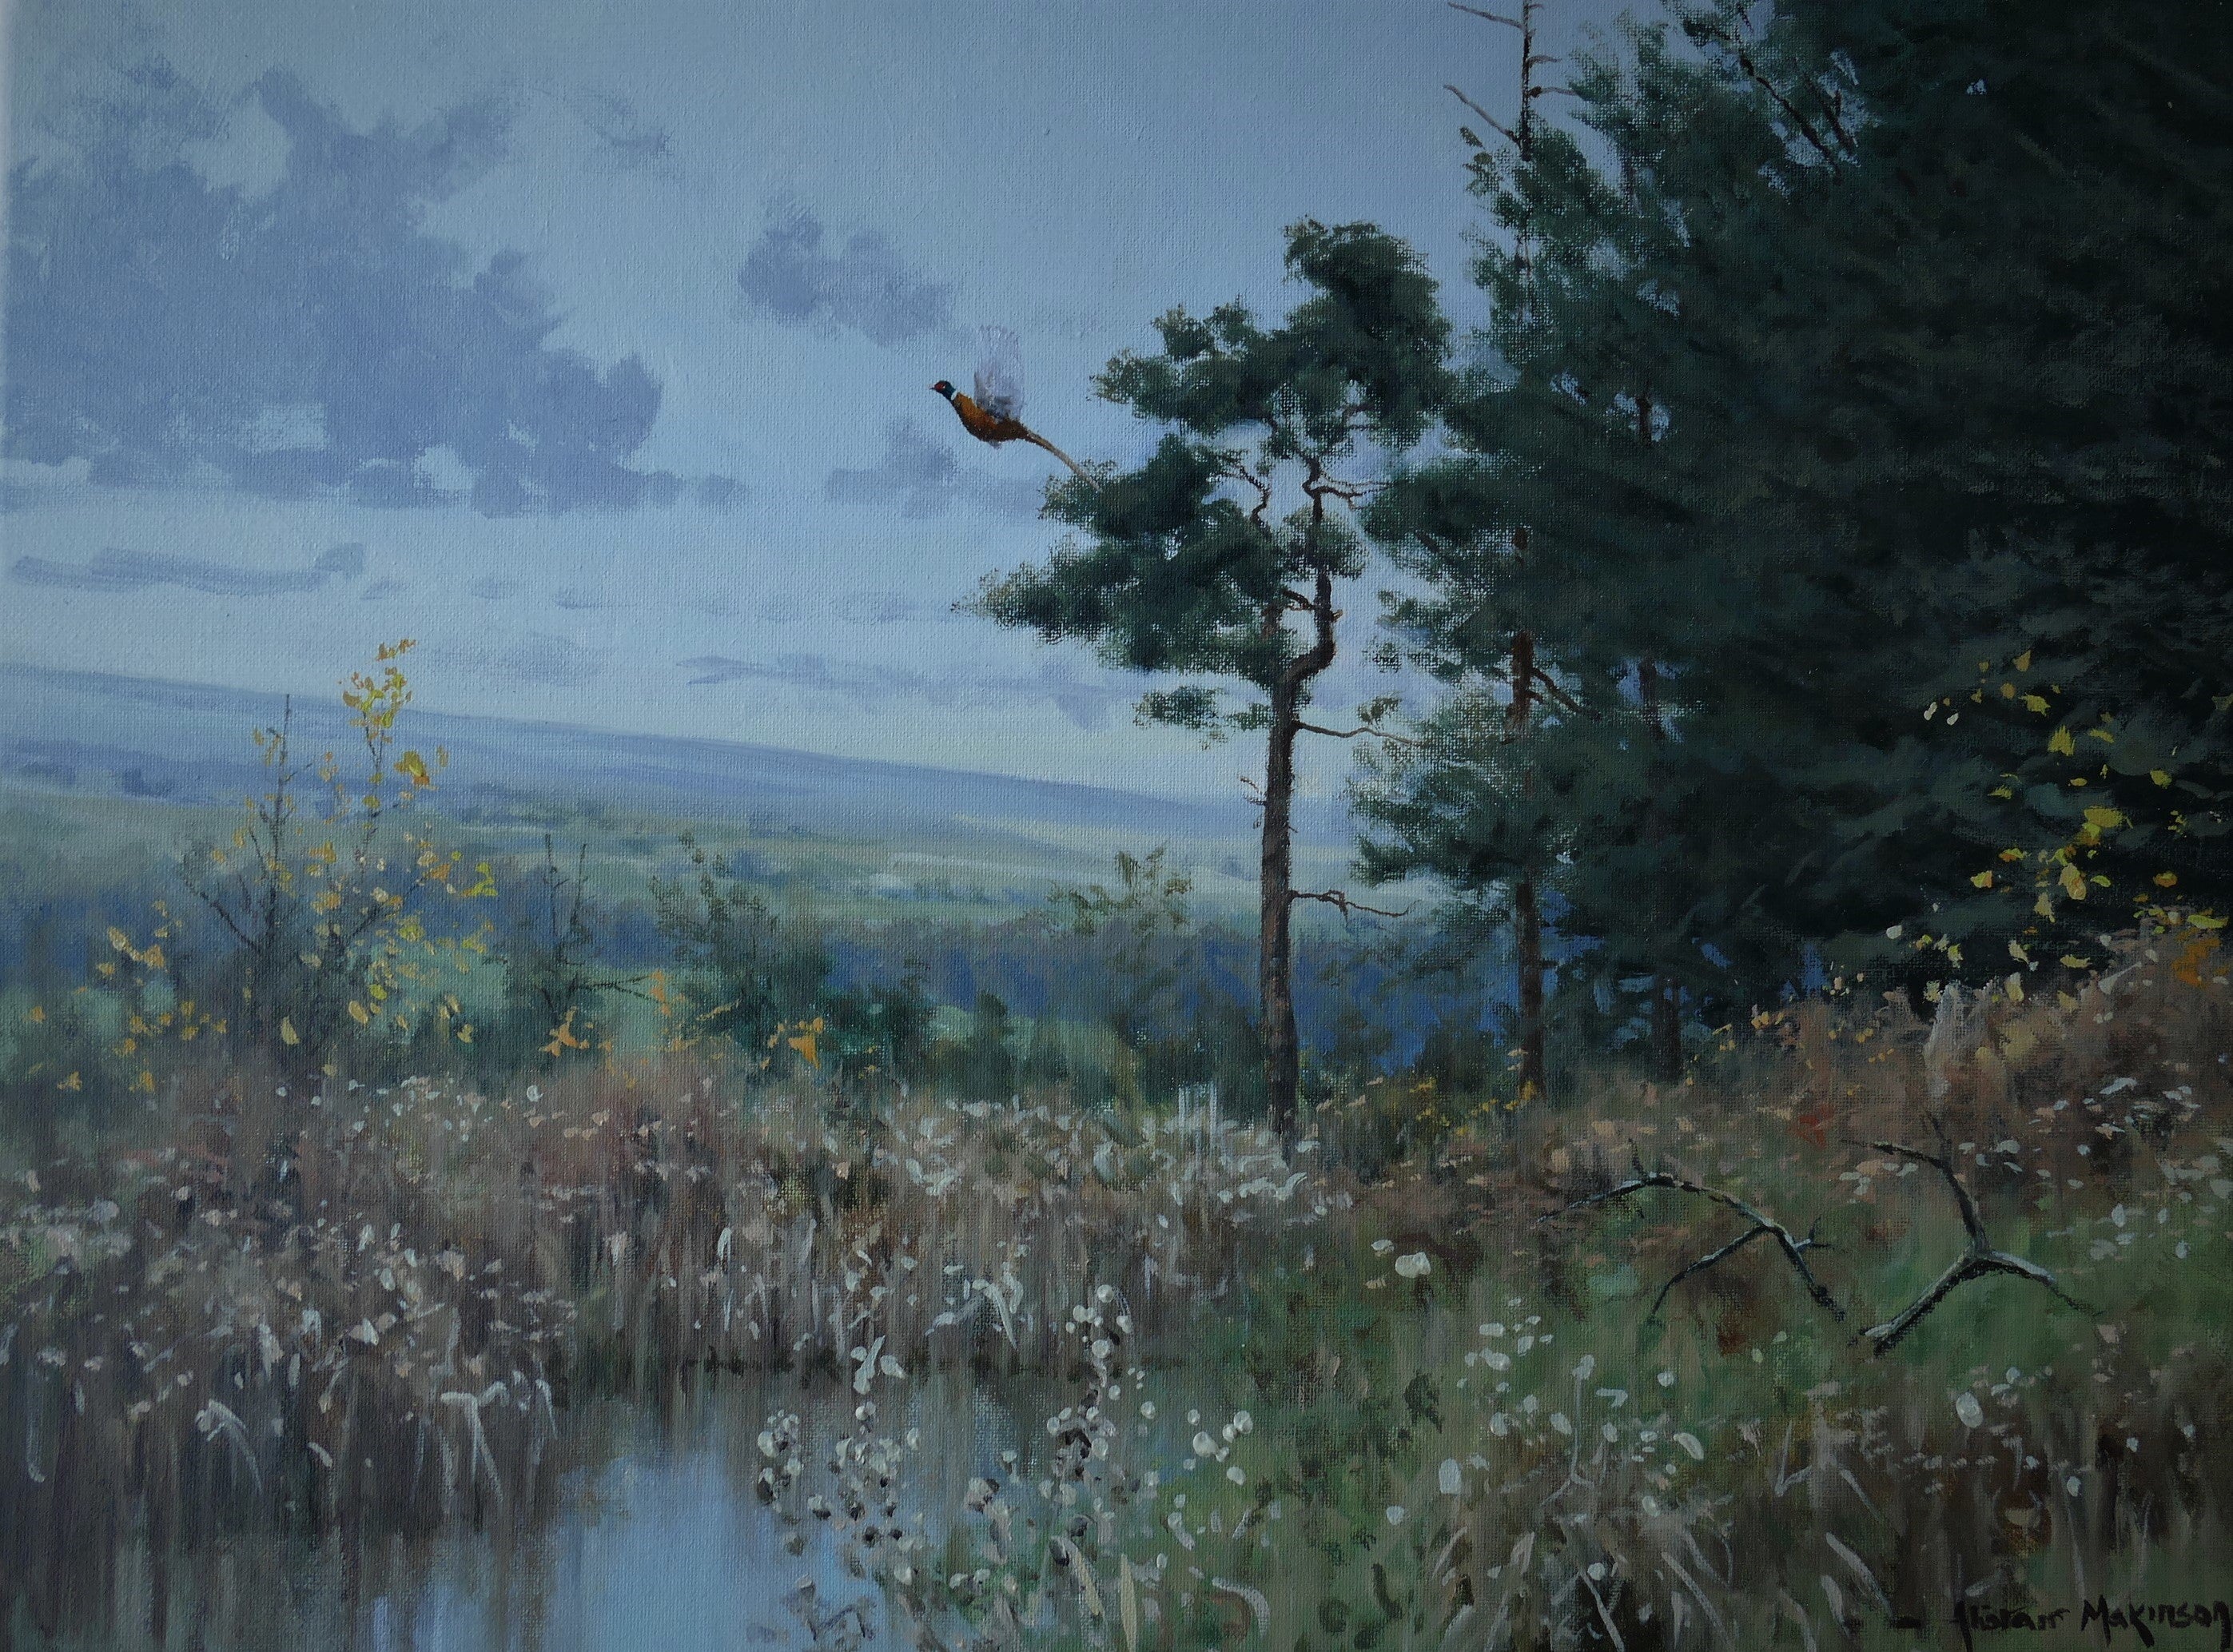 'Rising Pheasant' - Original Oil Painting by Alistair Makinson - 30 x 40cm